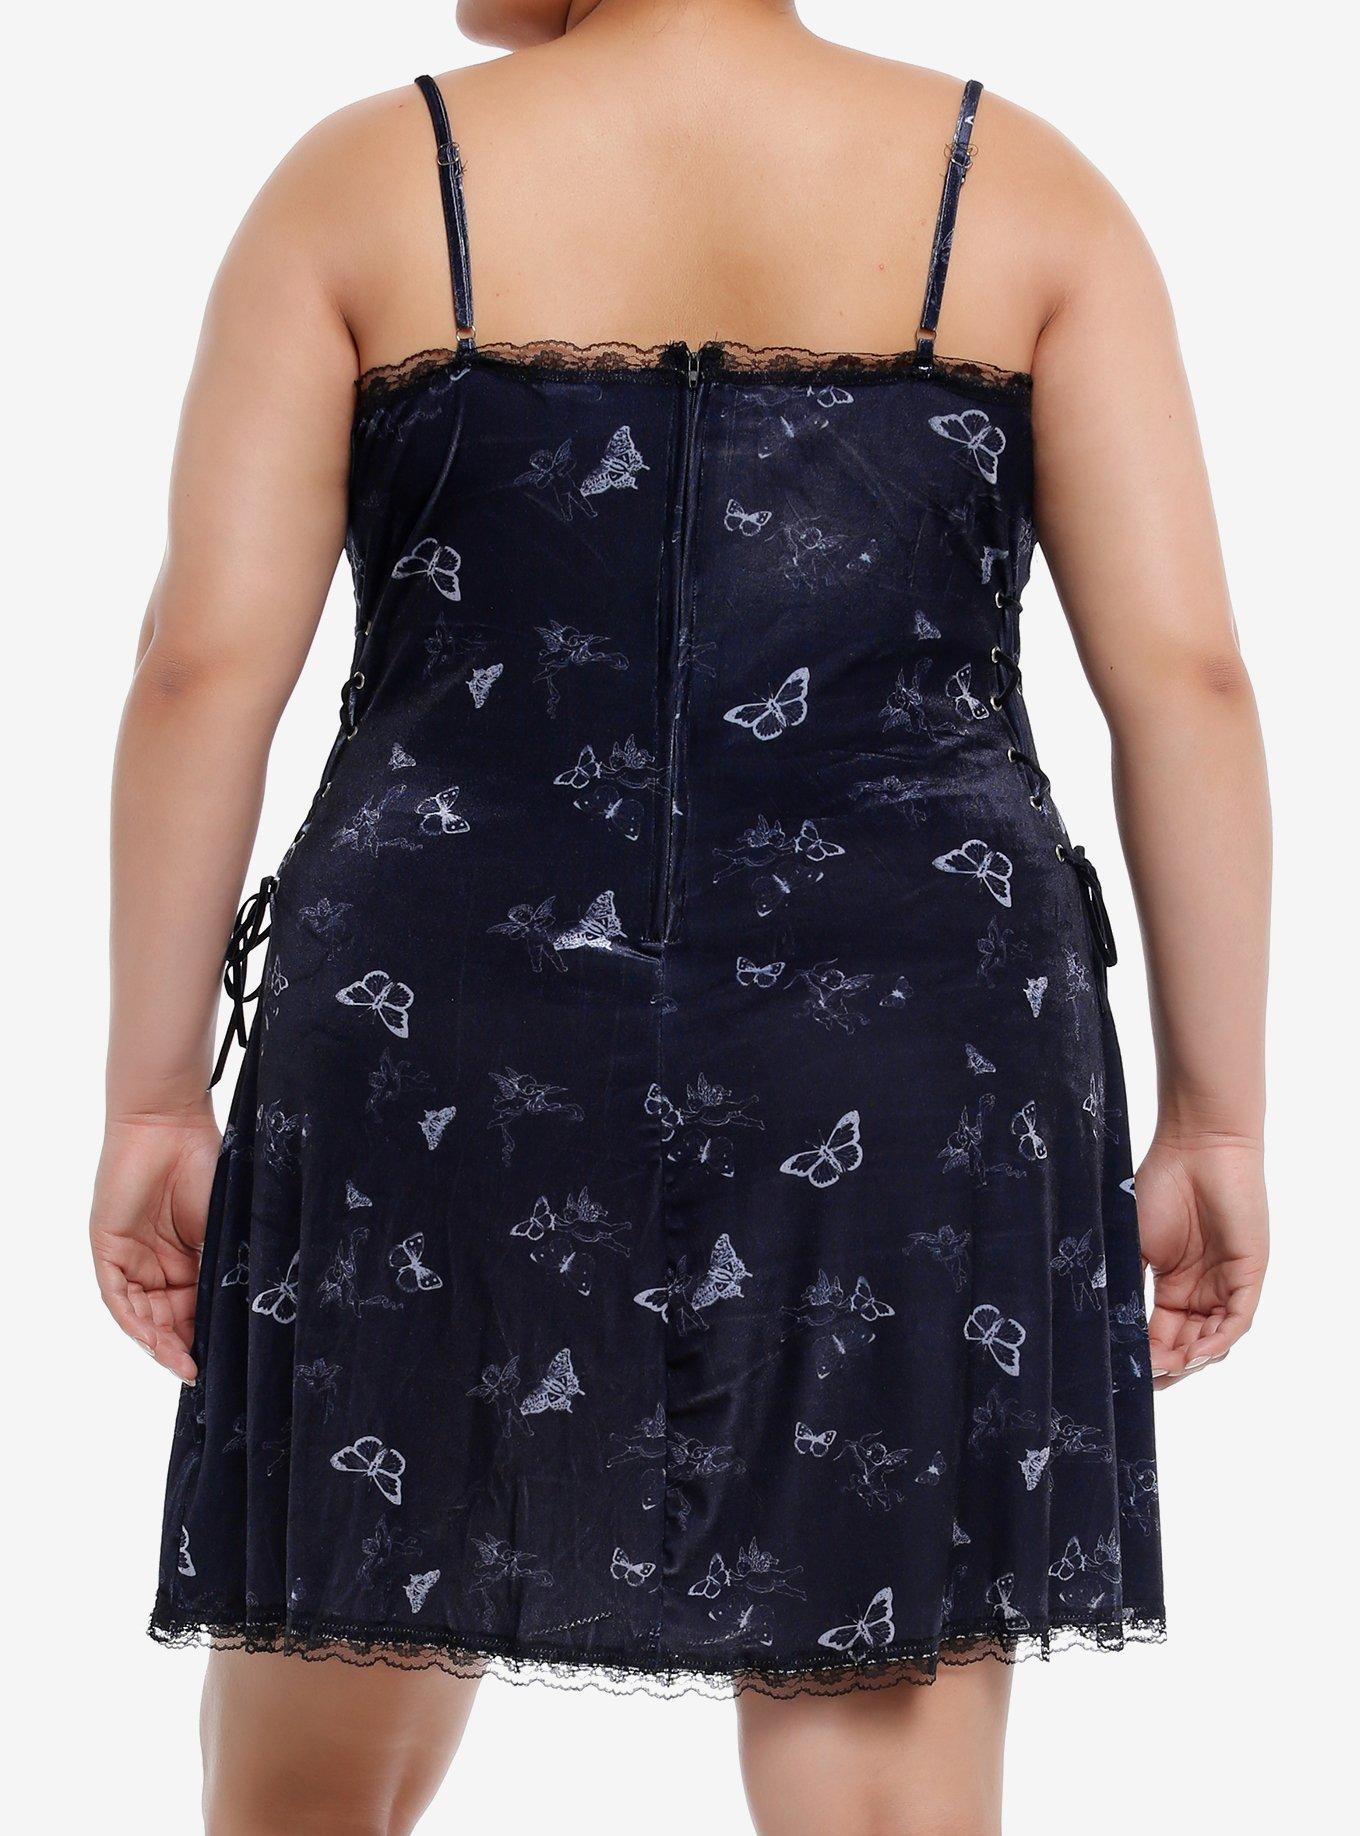 Daisy Street Black Velvet Butterfly Lace-Up Mini Dress Plus